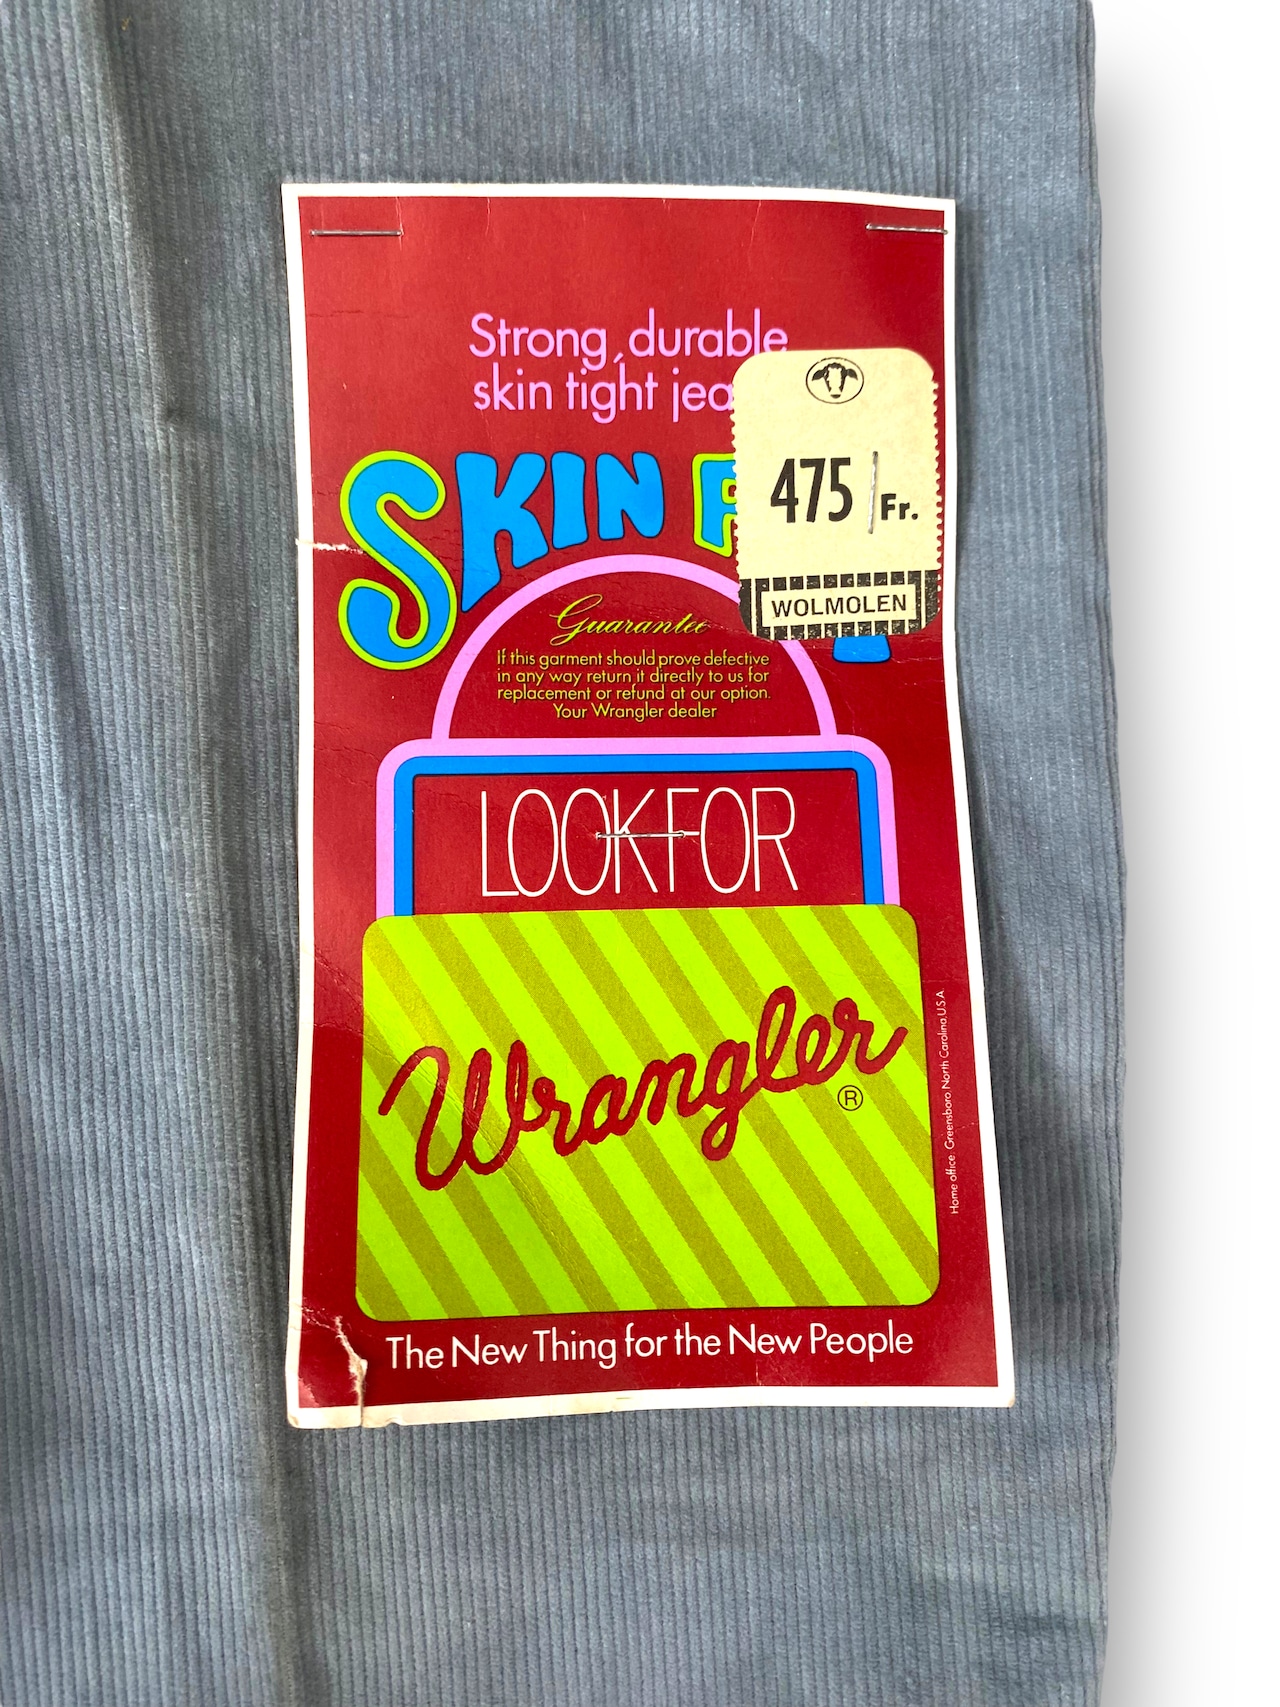 “Wrangler” dead stock corduroy skin fit pants